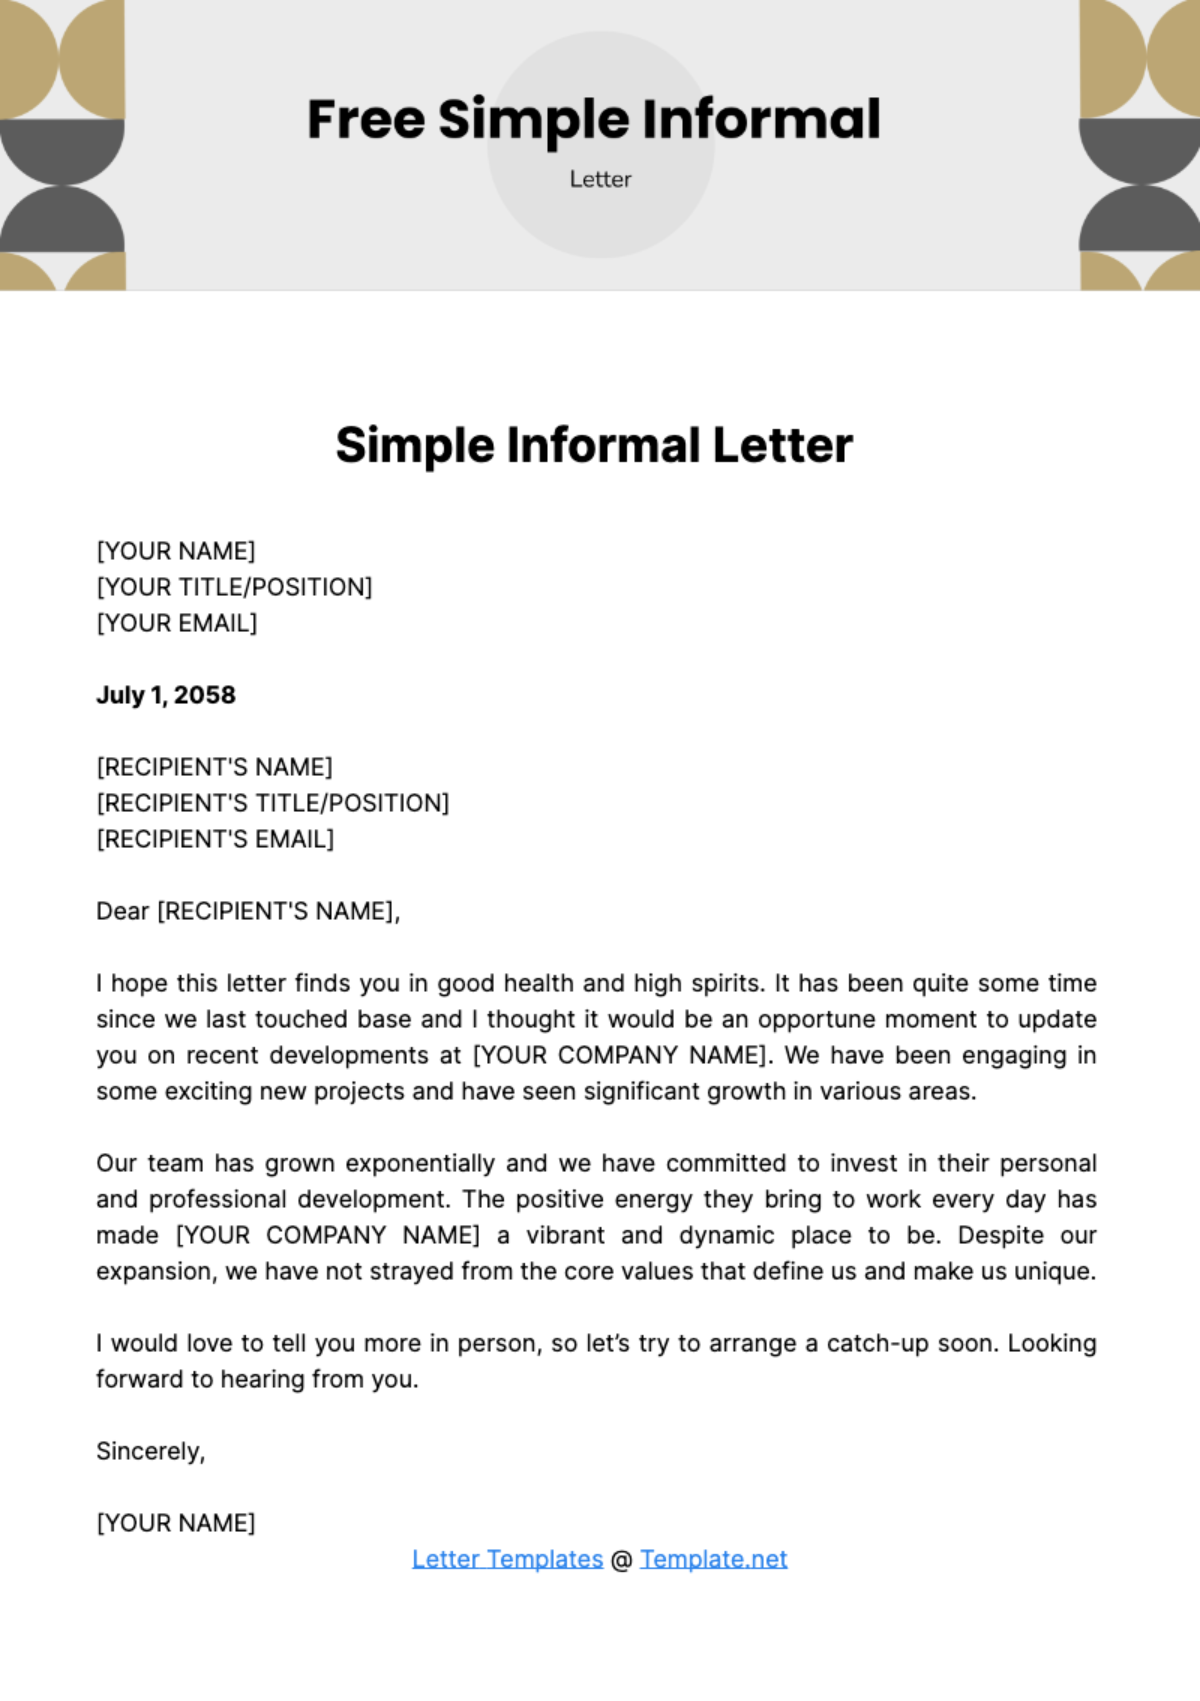 Simple Informal Letter Template